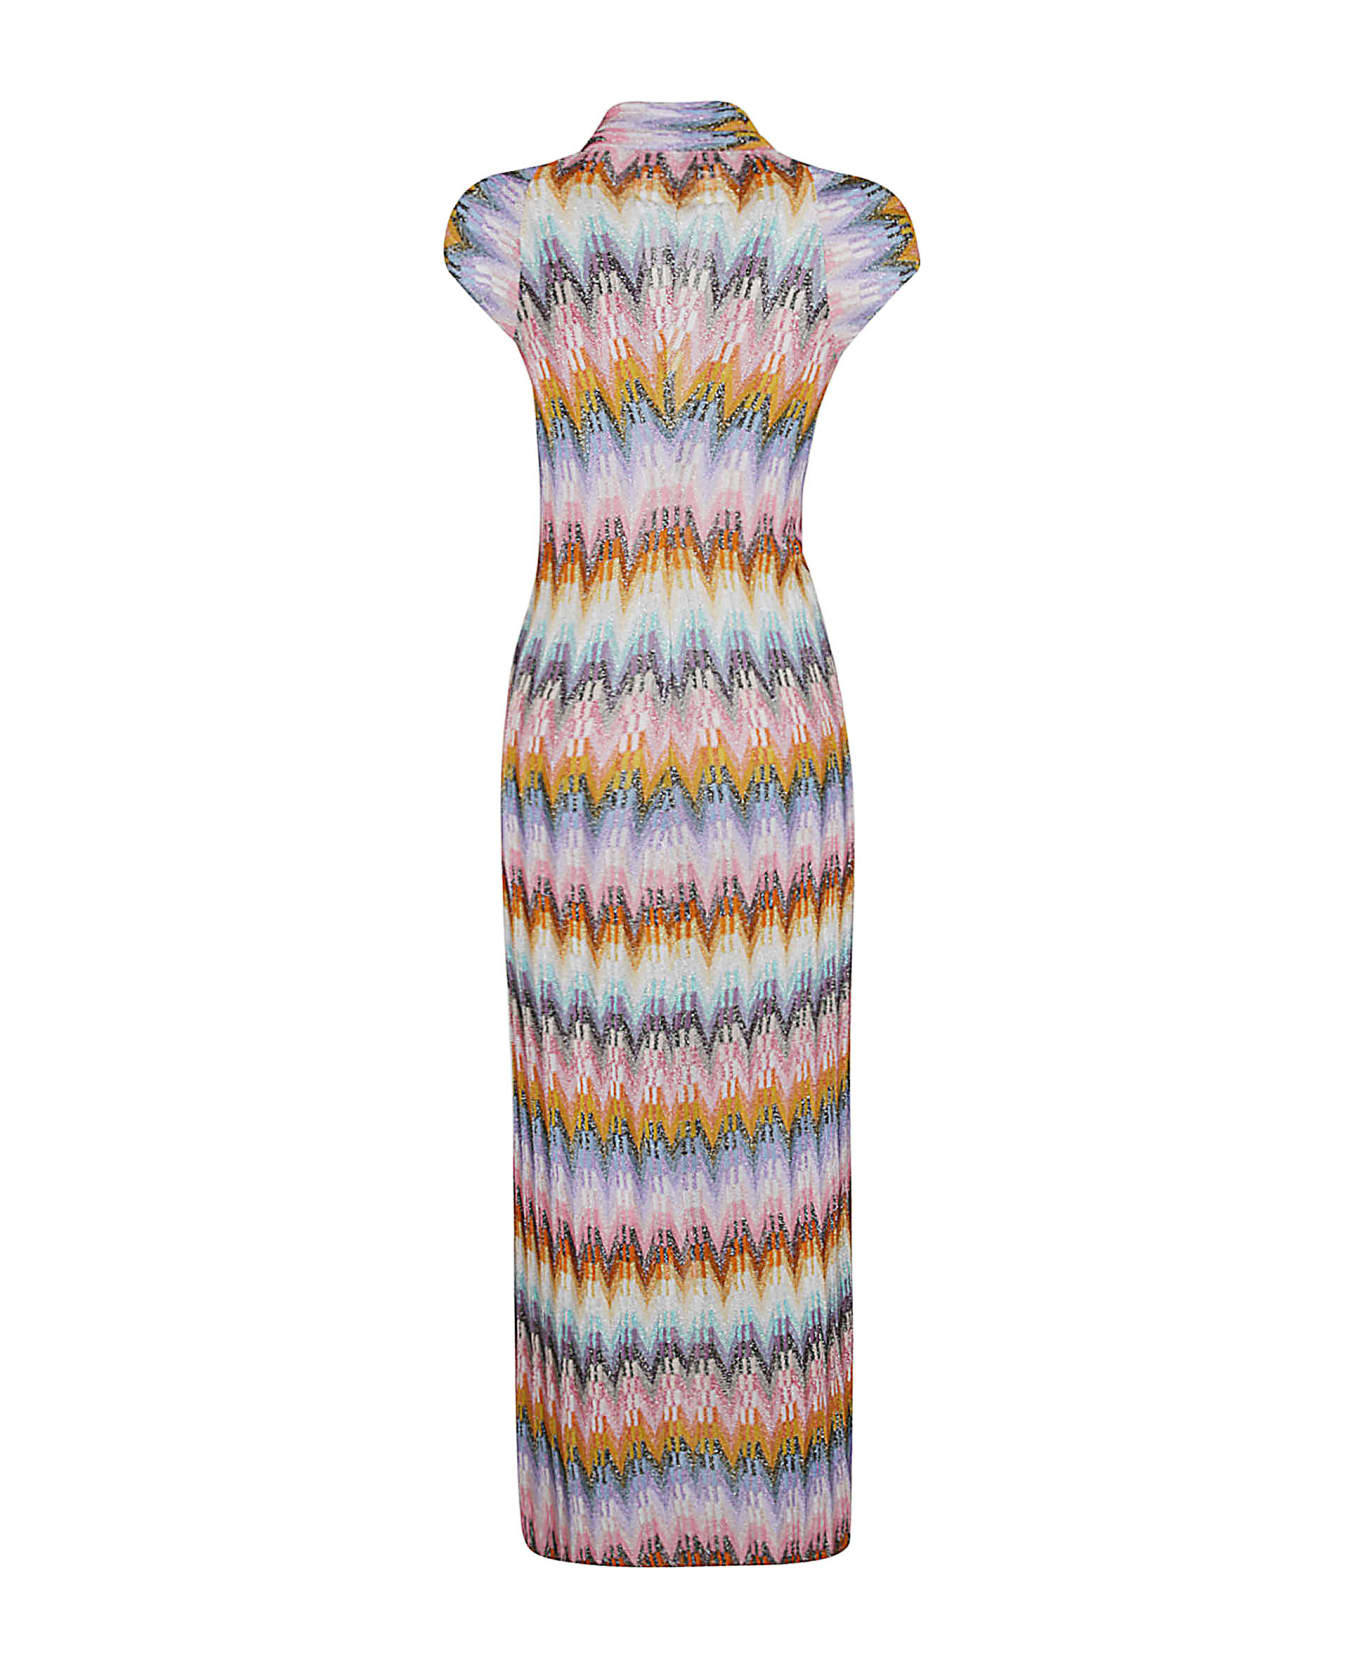 Missoni Wrap Front Asymmetric Zig-zag Patterned Sleeveless Dress - multi yell/grt/blu/